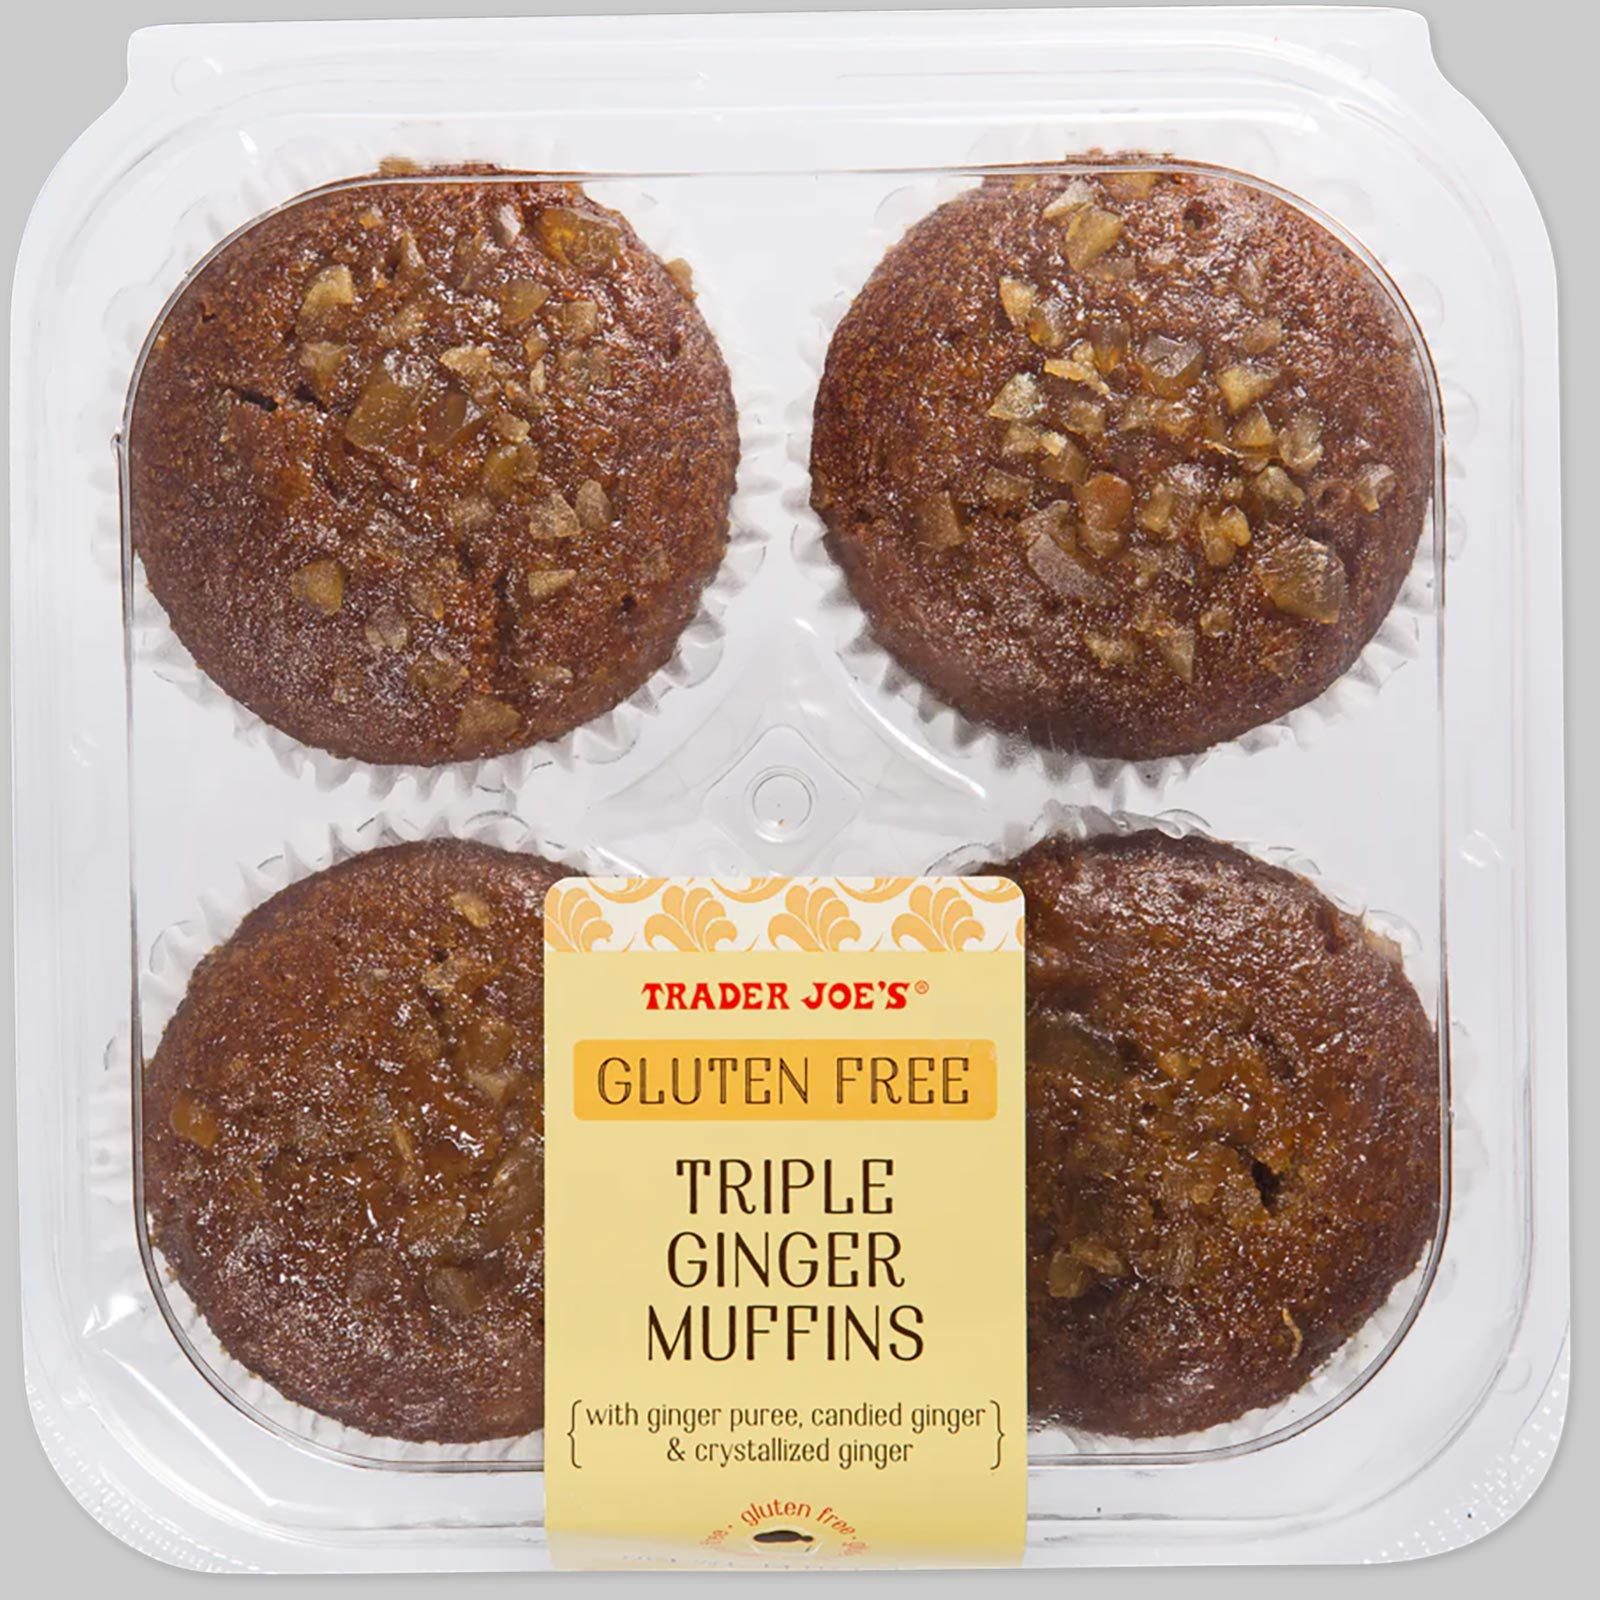 Trader Joe's Gluten Free Triple Ginger Muffins